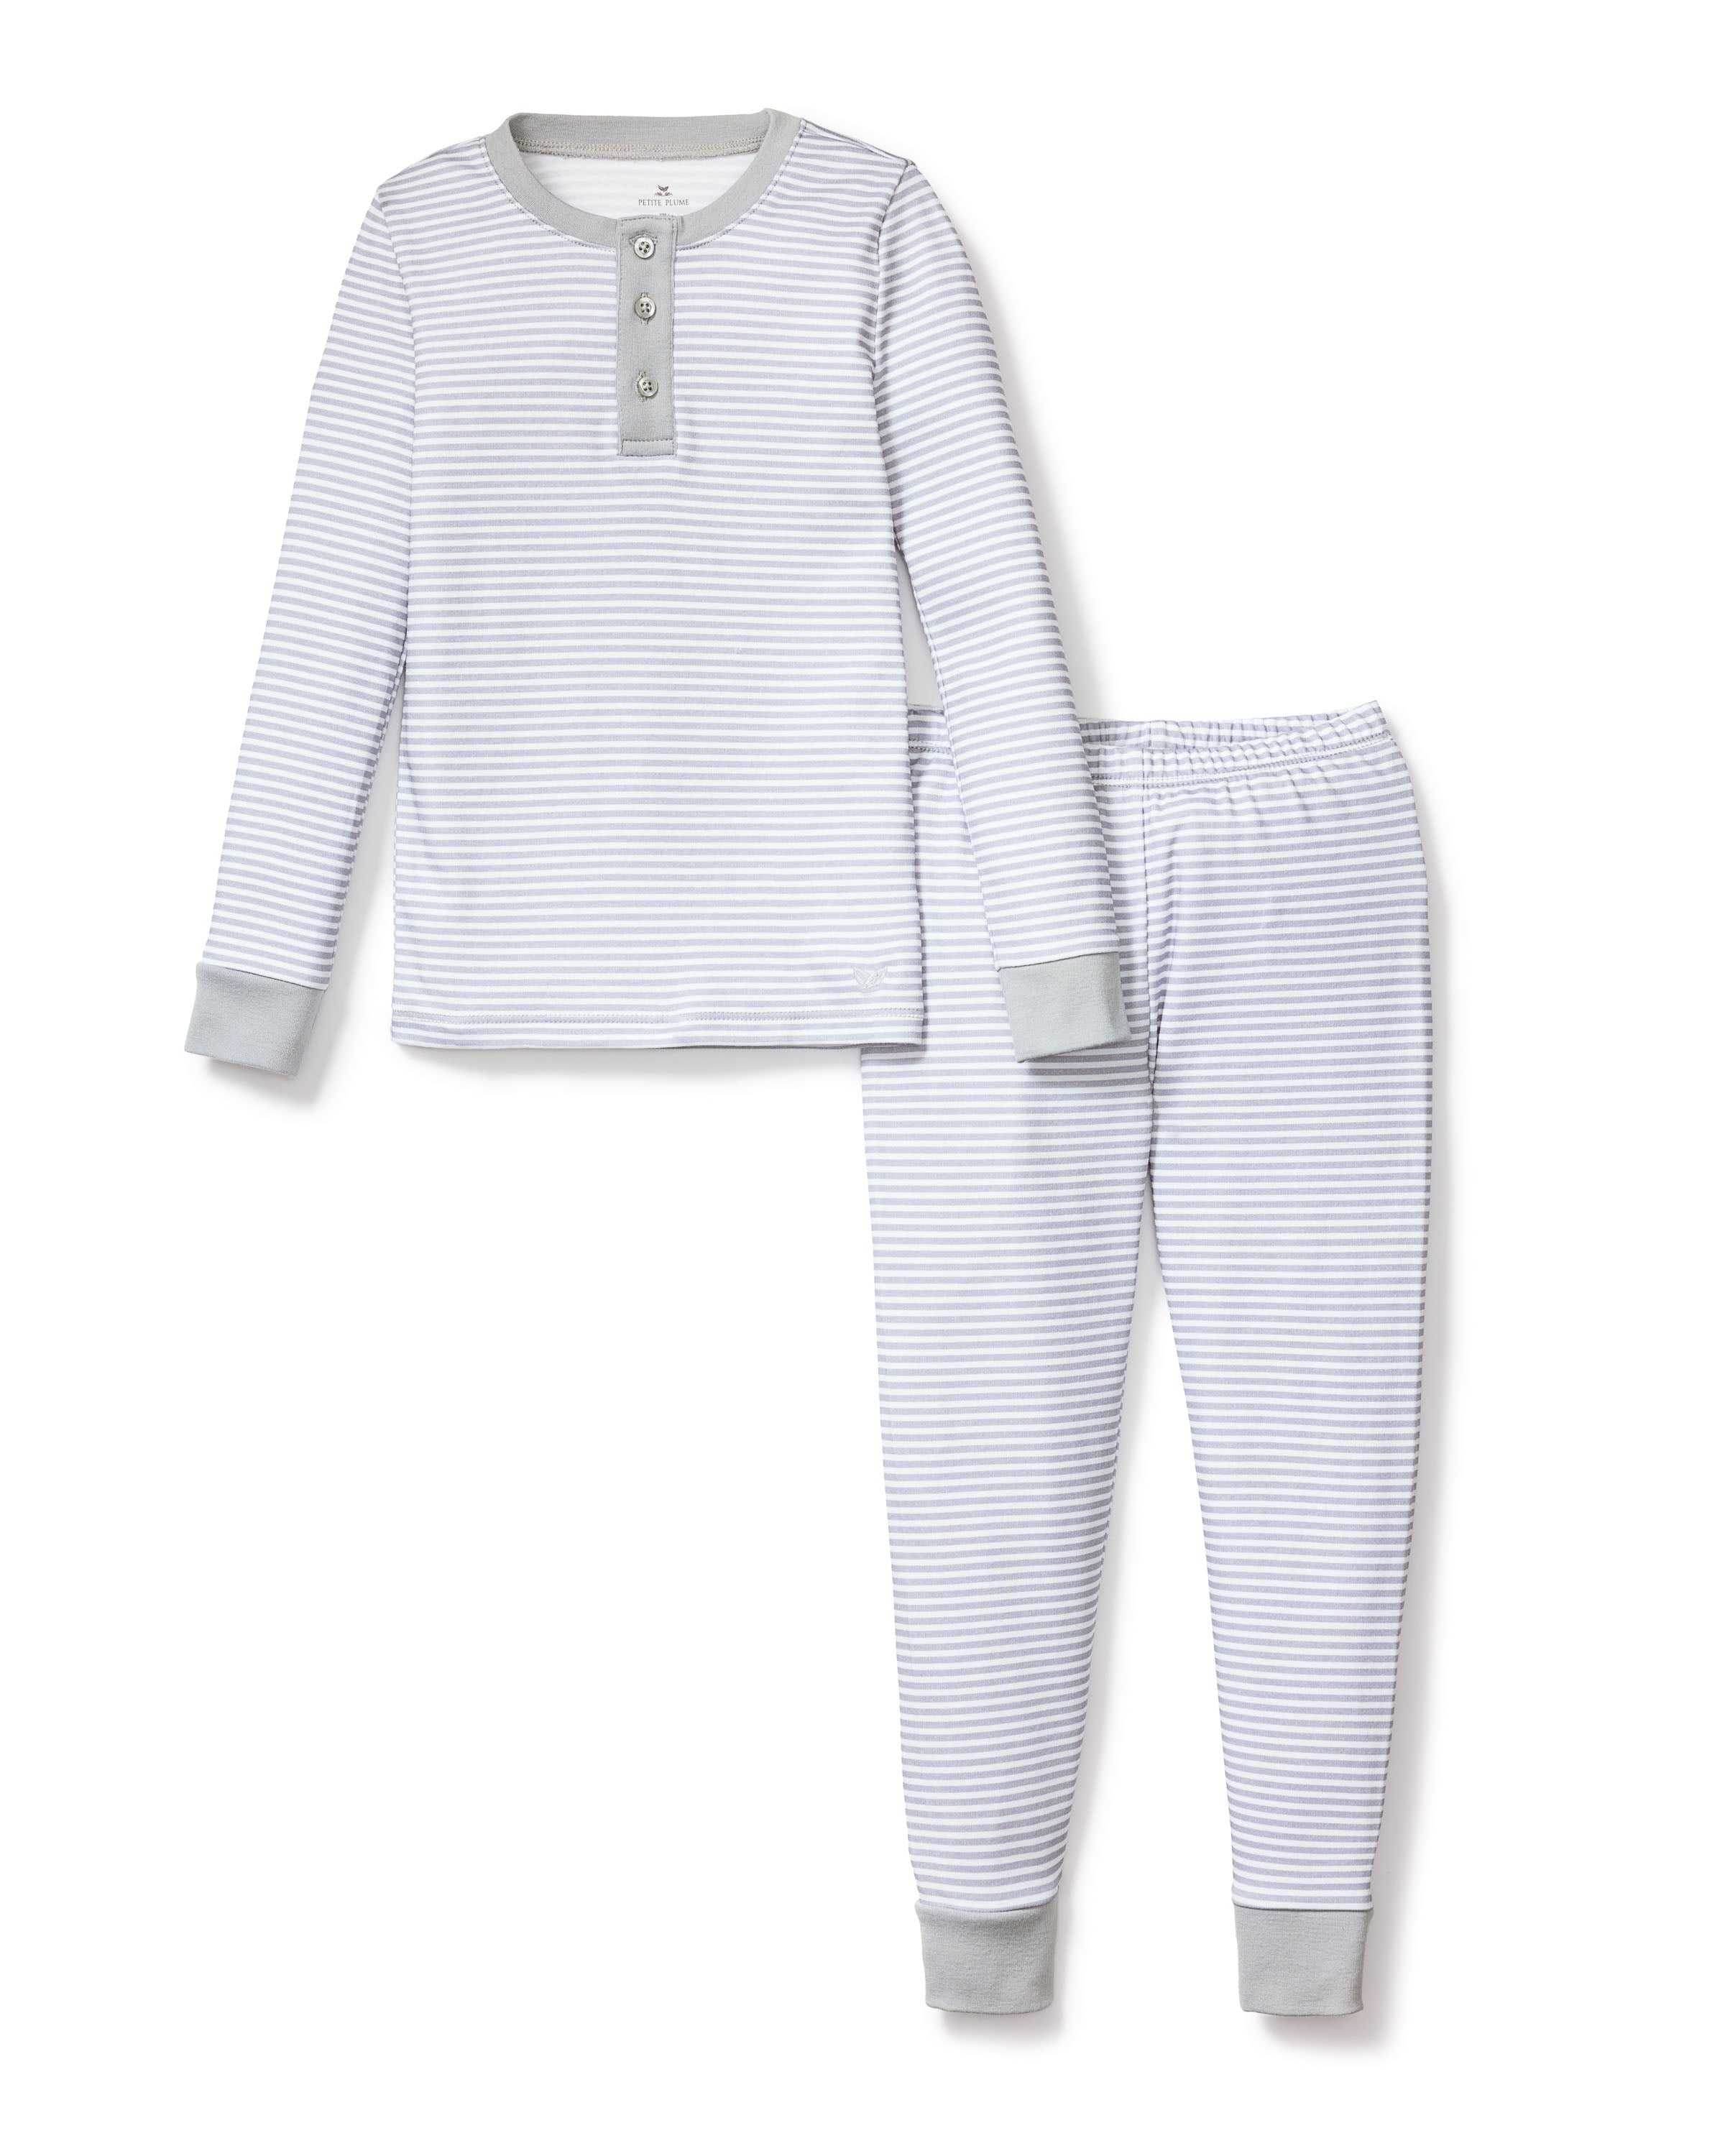 Kid's Pima Snug Fit Pajama Set in Grey Stripes